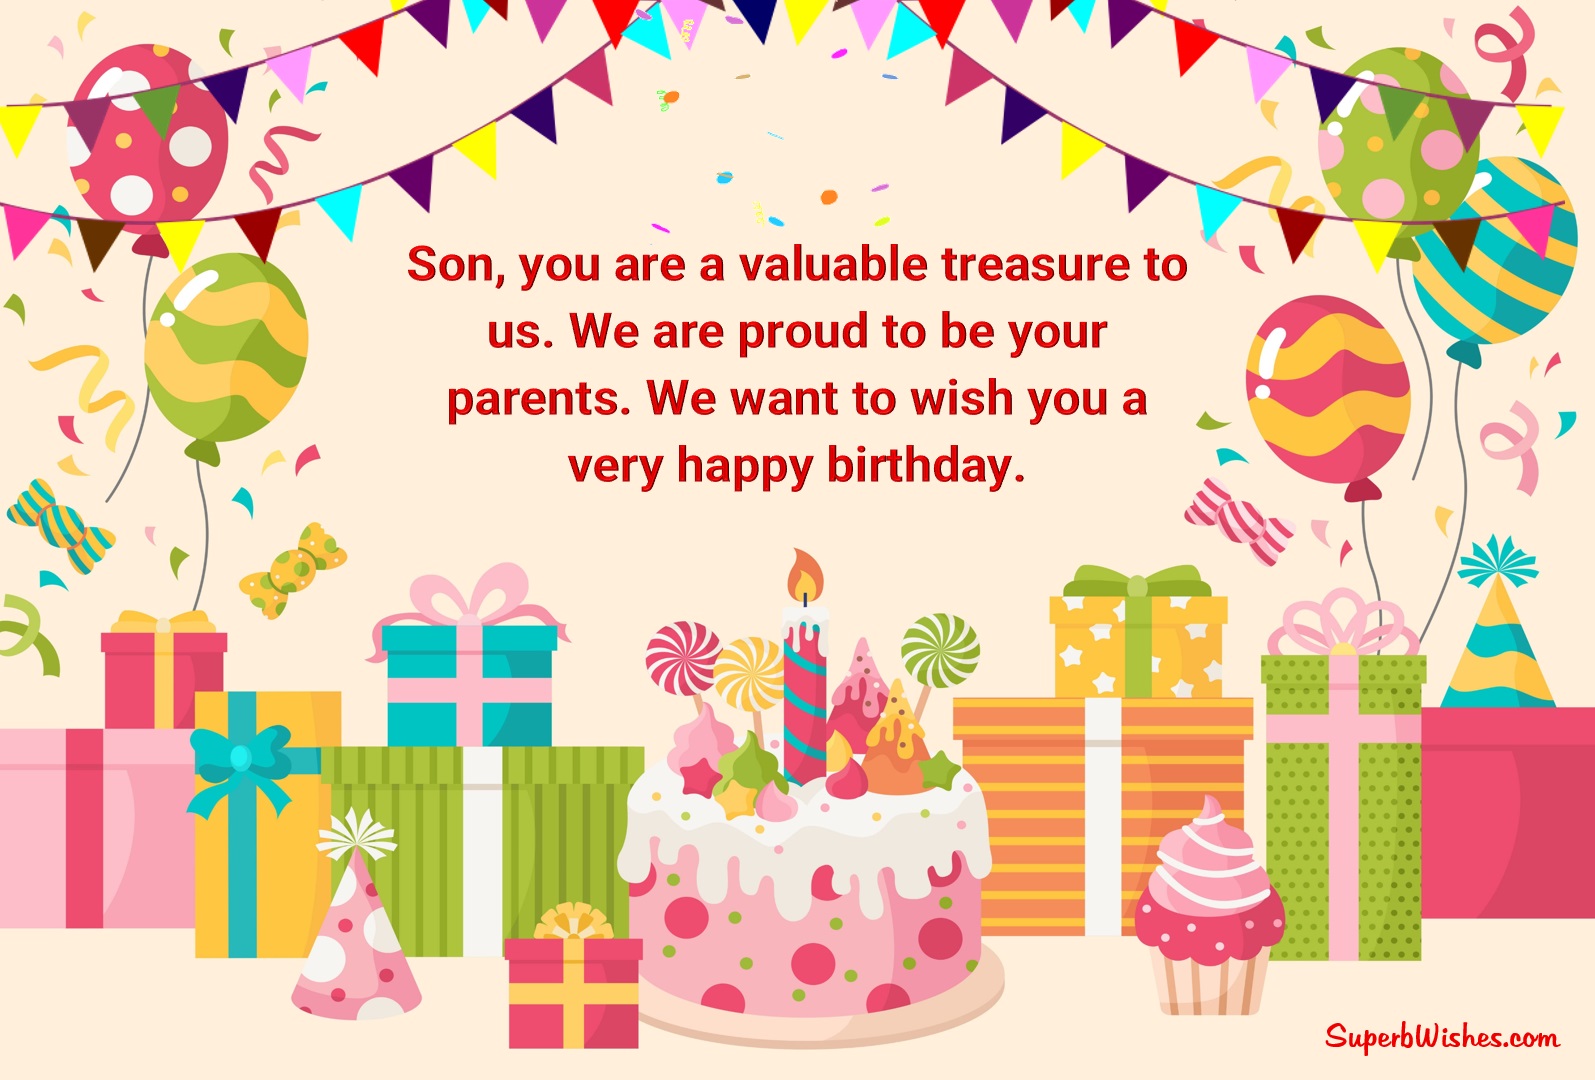 Happy birthday wish for son. Superbwishes.com